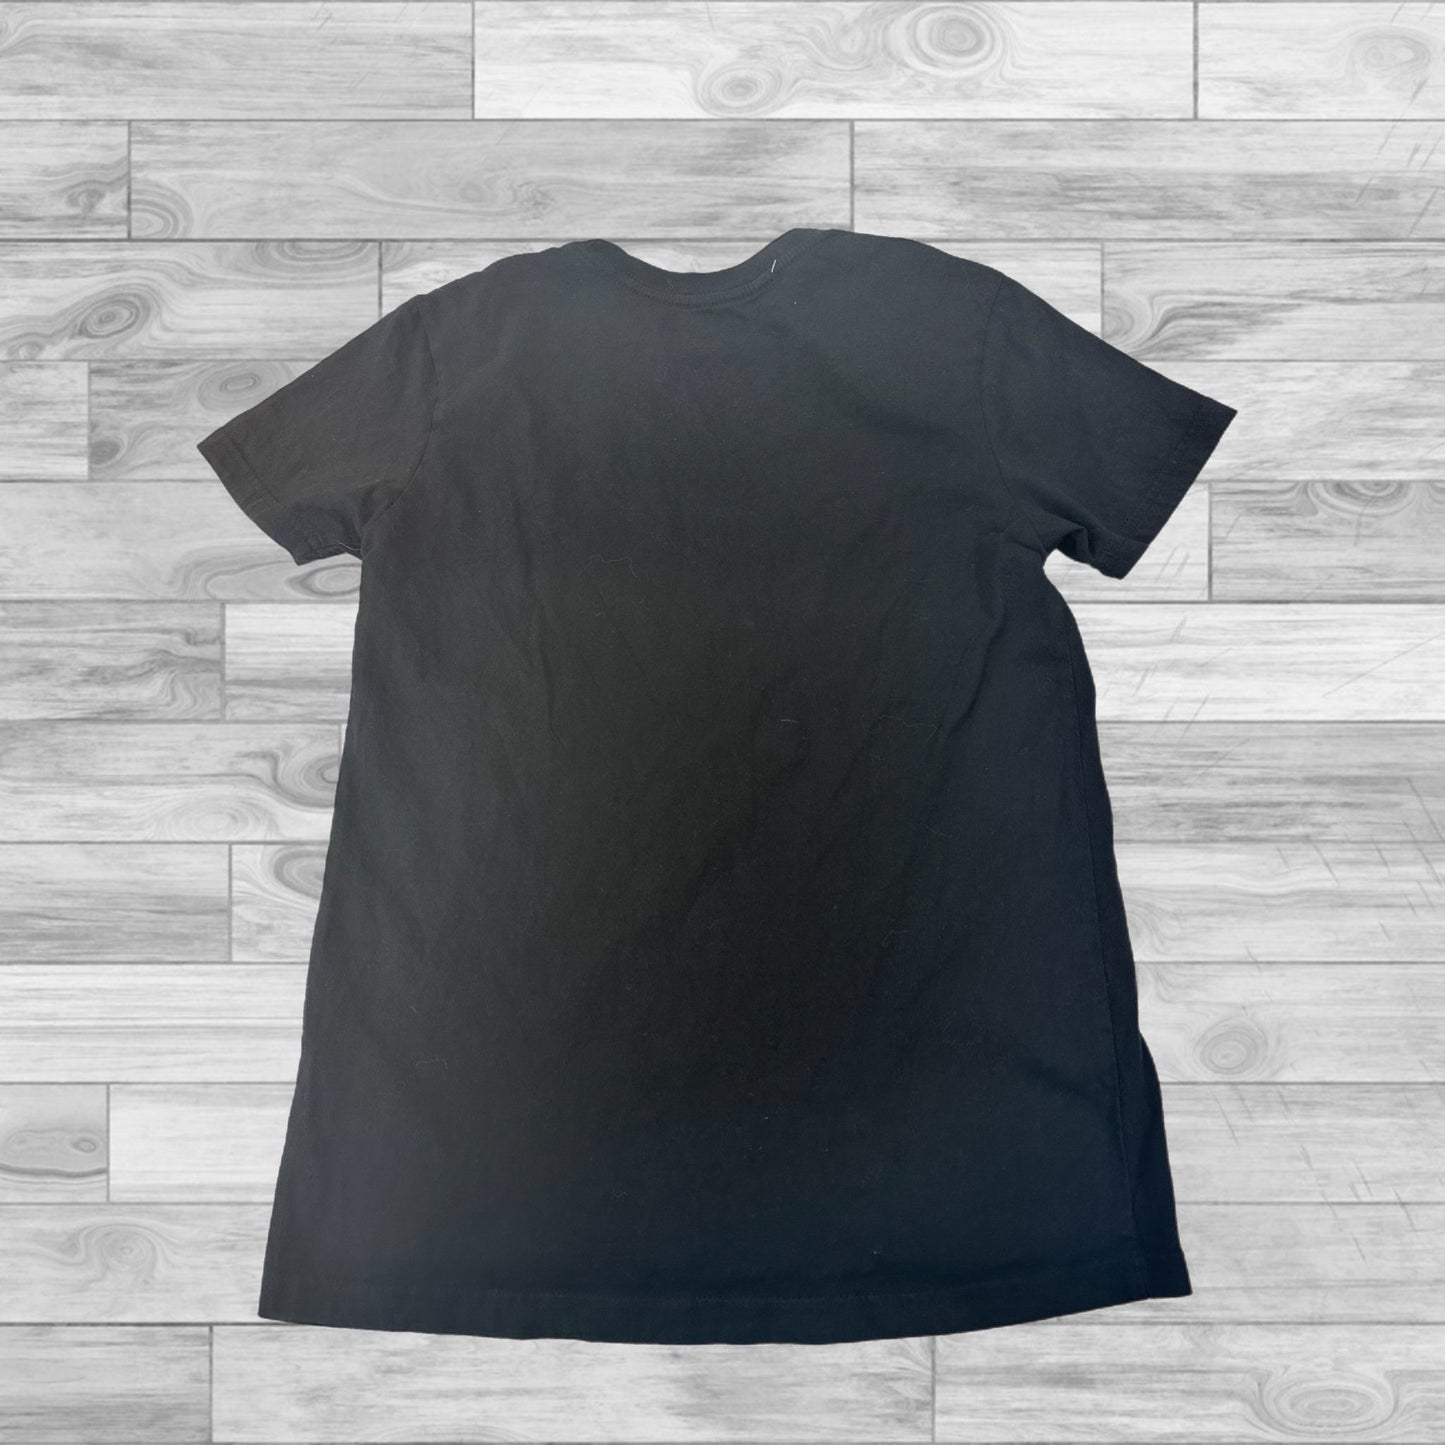 Black Top Short Sleeve Basic Disney Store, Size Xs